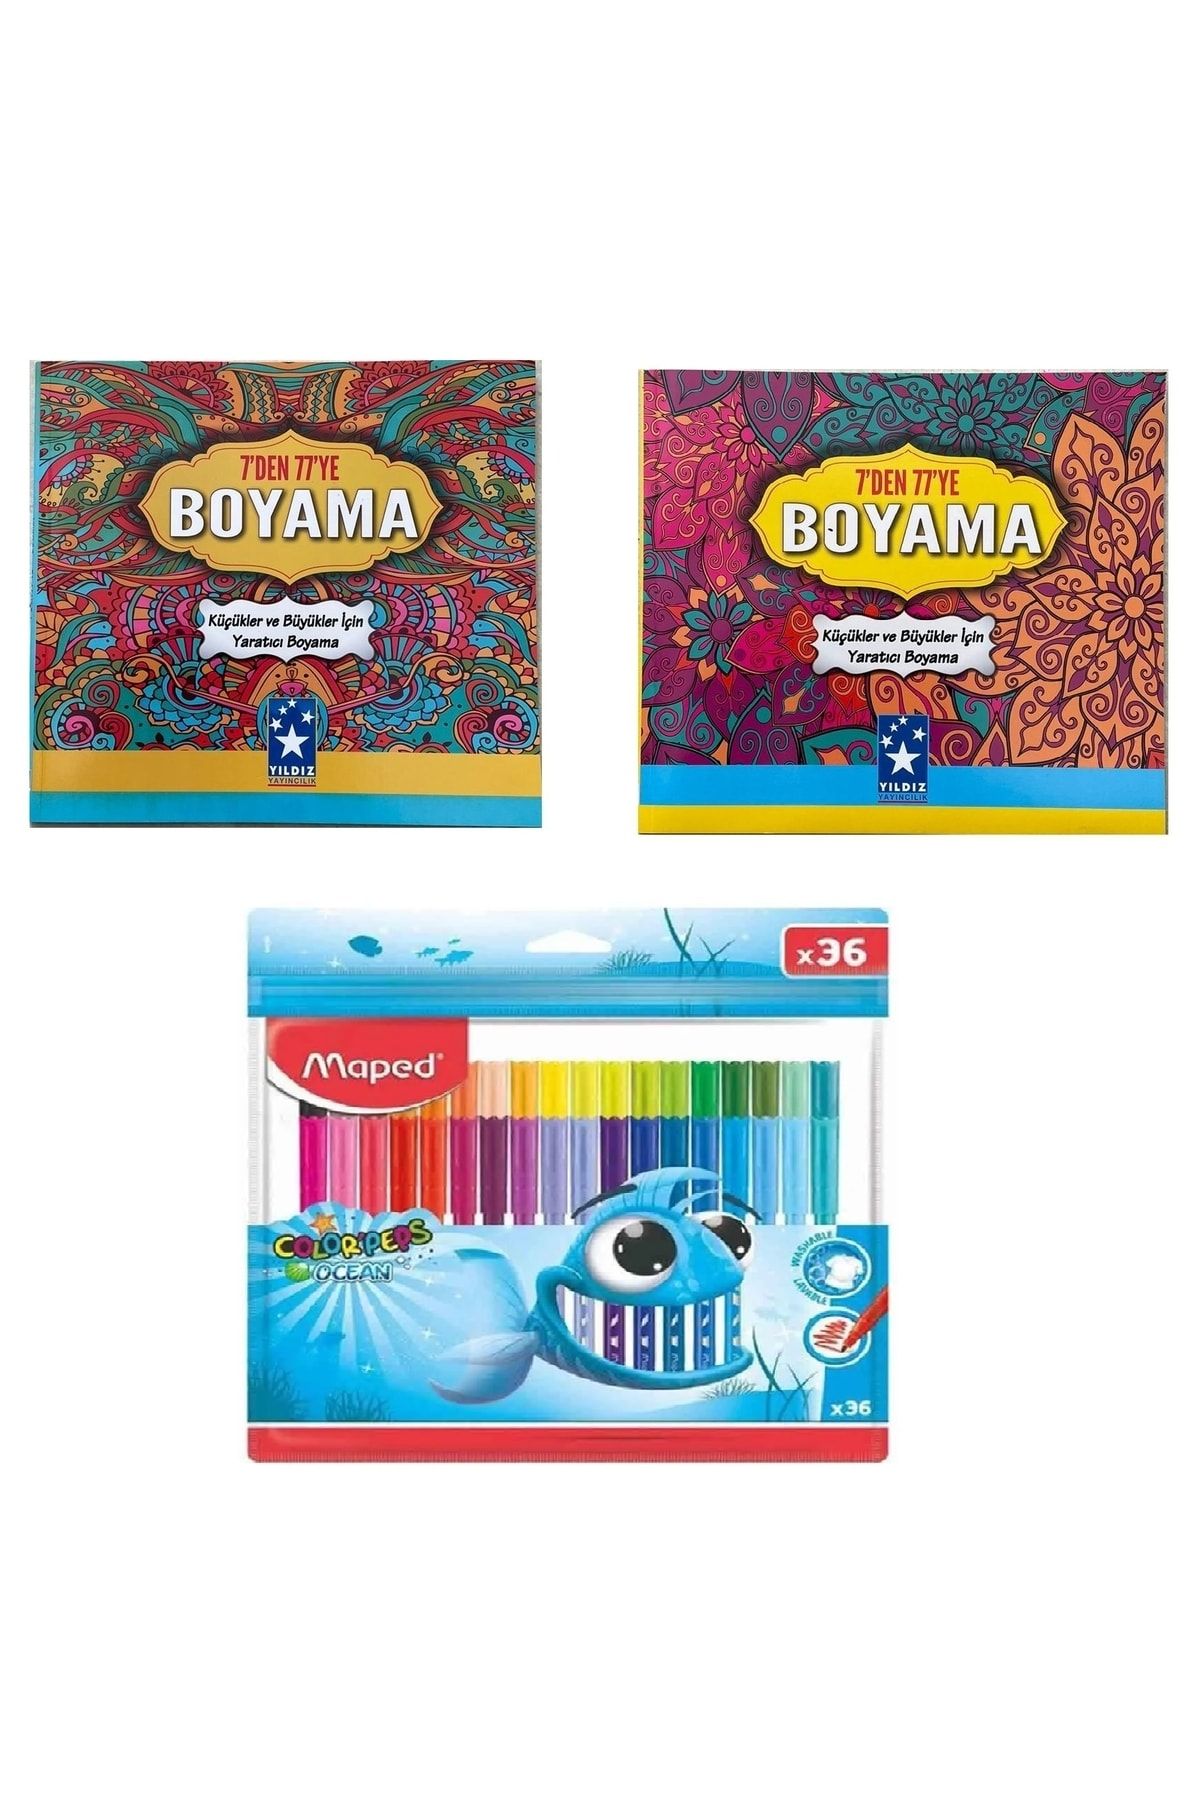 Balmira Mandala Boyama Seti - 2 Kitap Ve Maped 36 Renk Keçeli Kalem mandalaset12